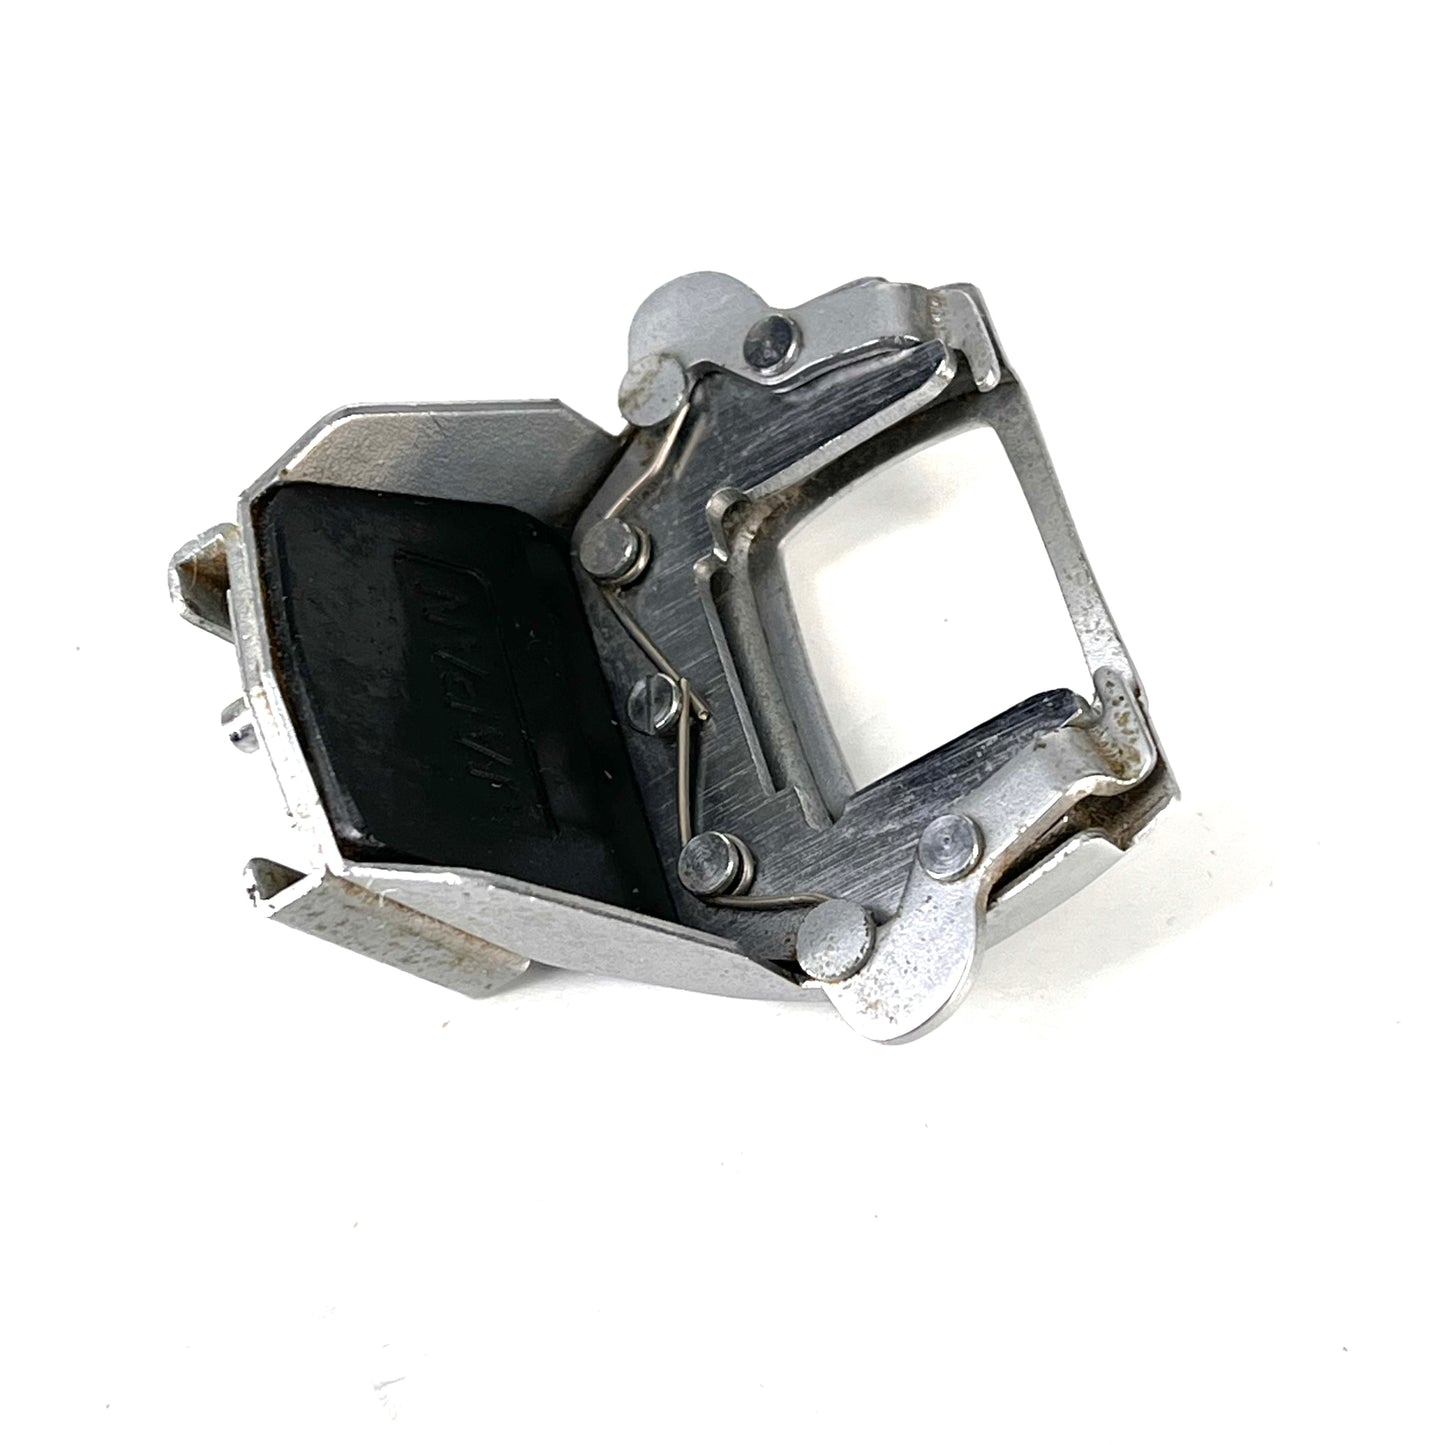 Pentax eyepiece hotshoe adapter